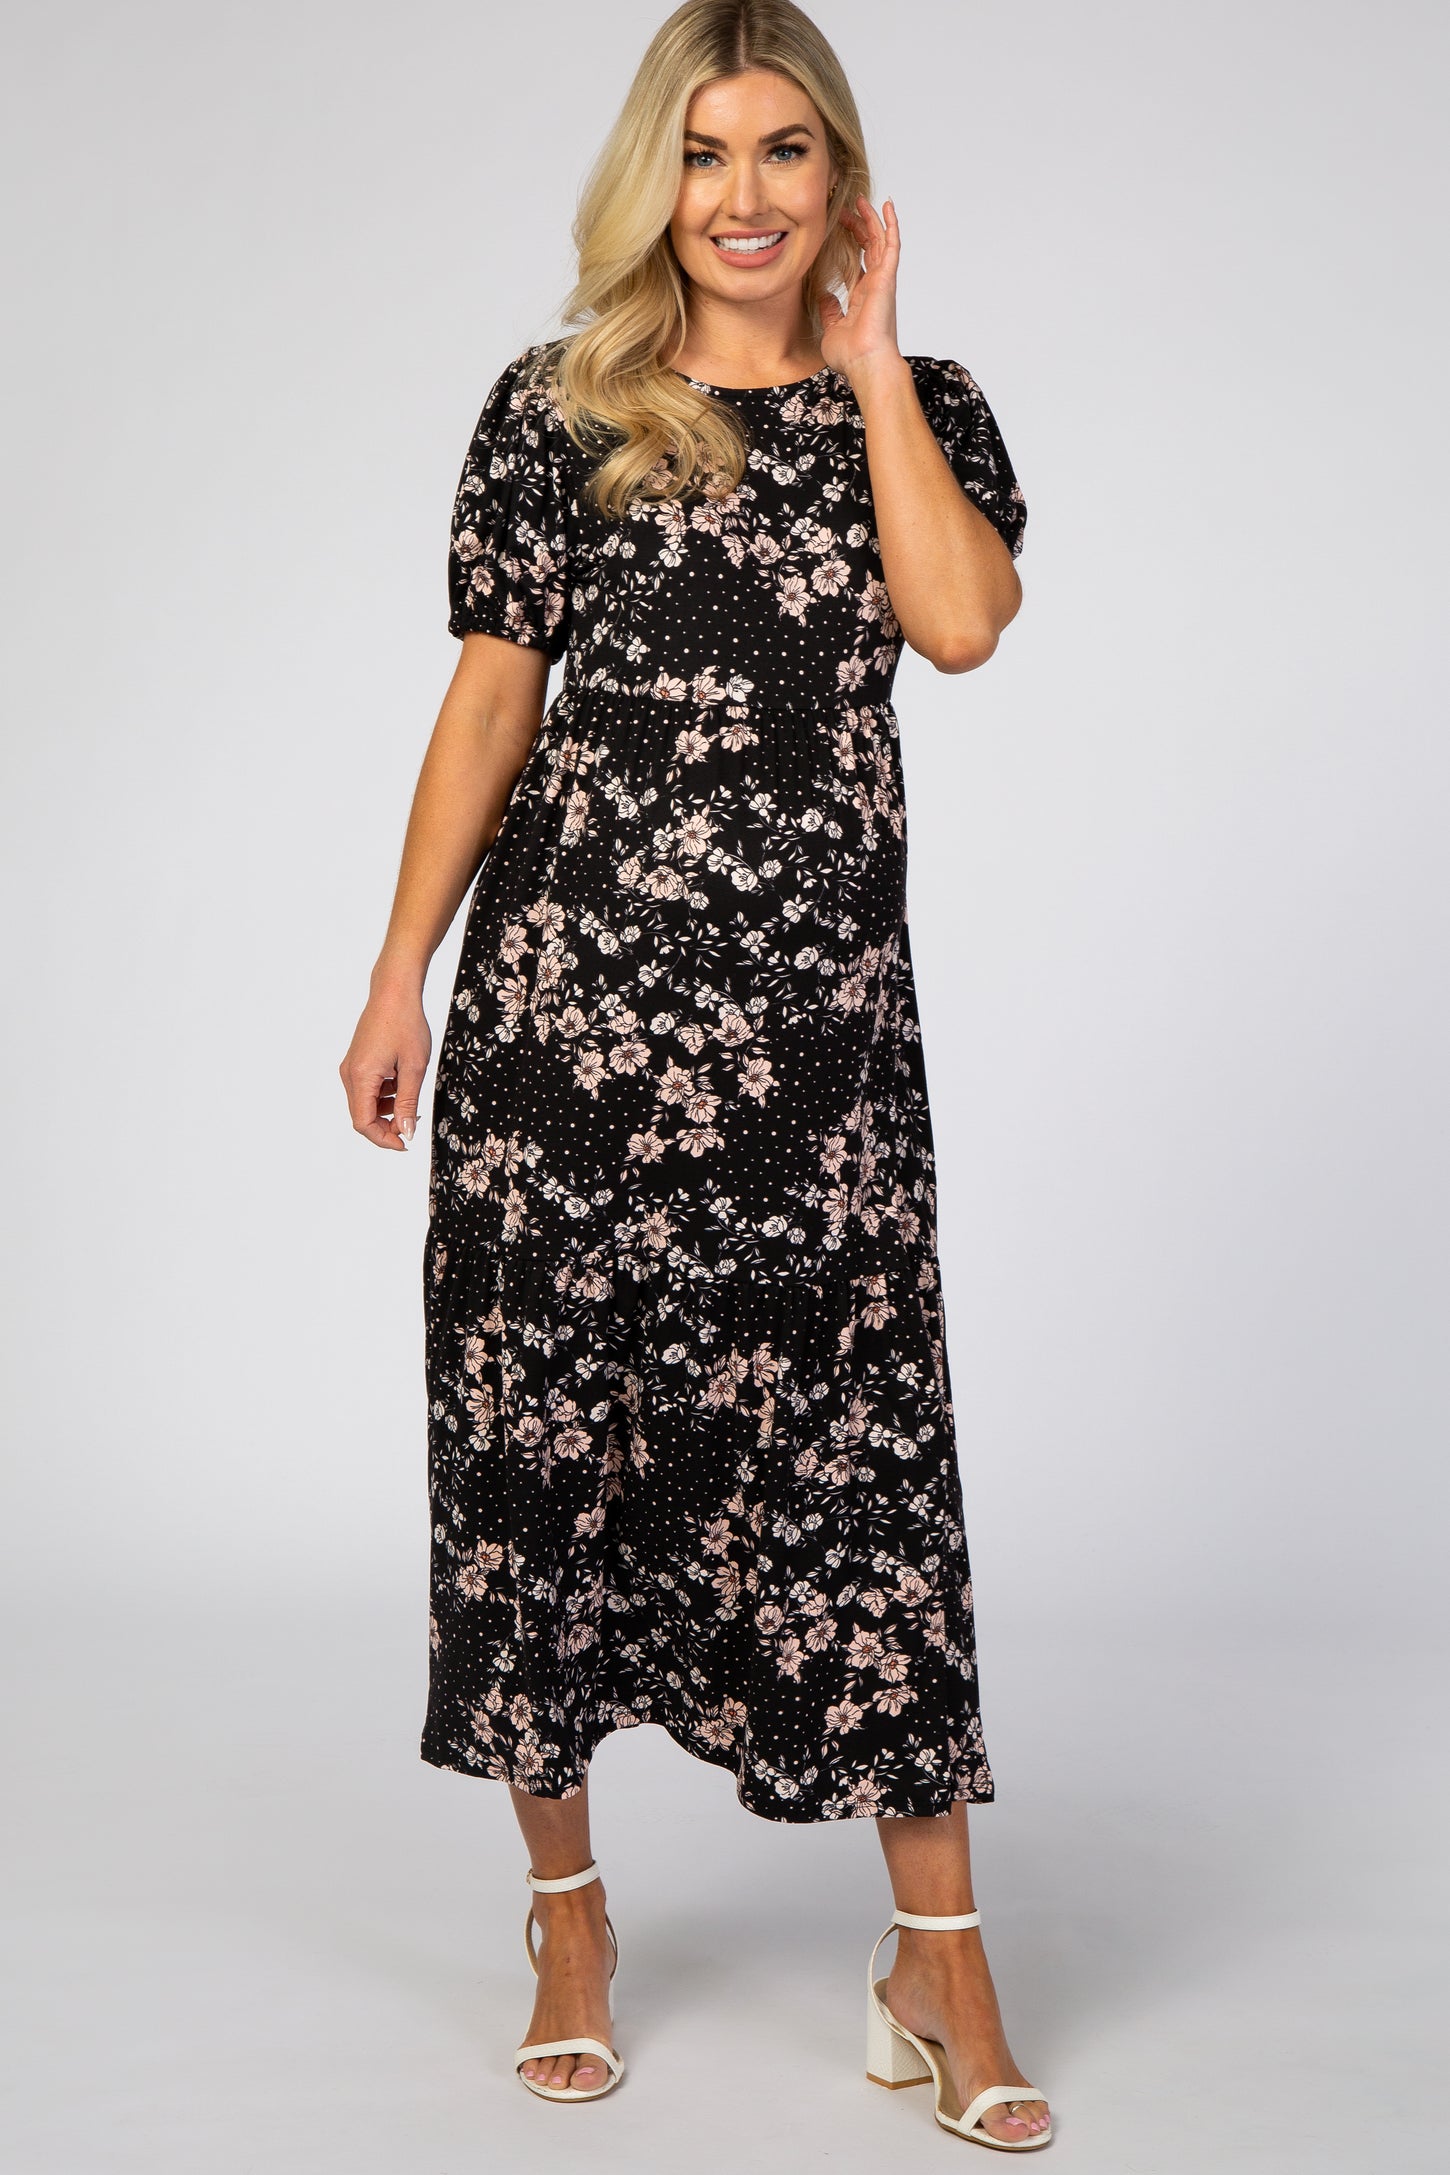 Black Floral Empire Waist Ruffle Hem Maternity Midi Dress– PinkBlush